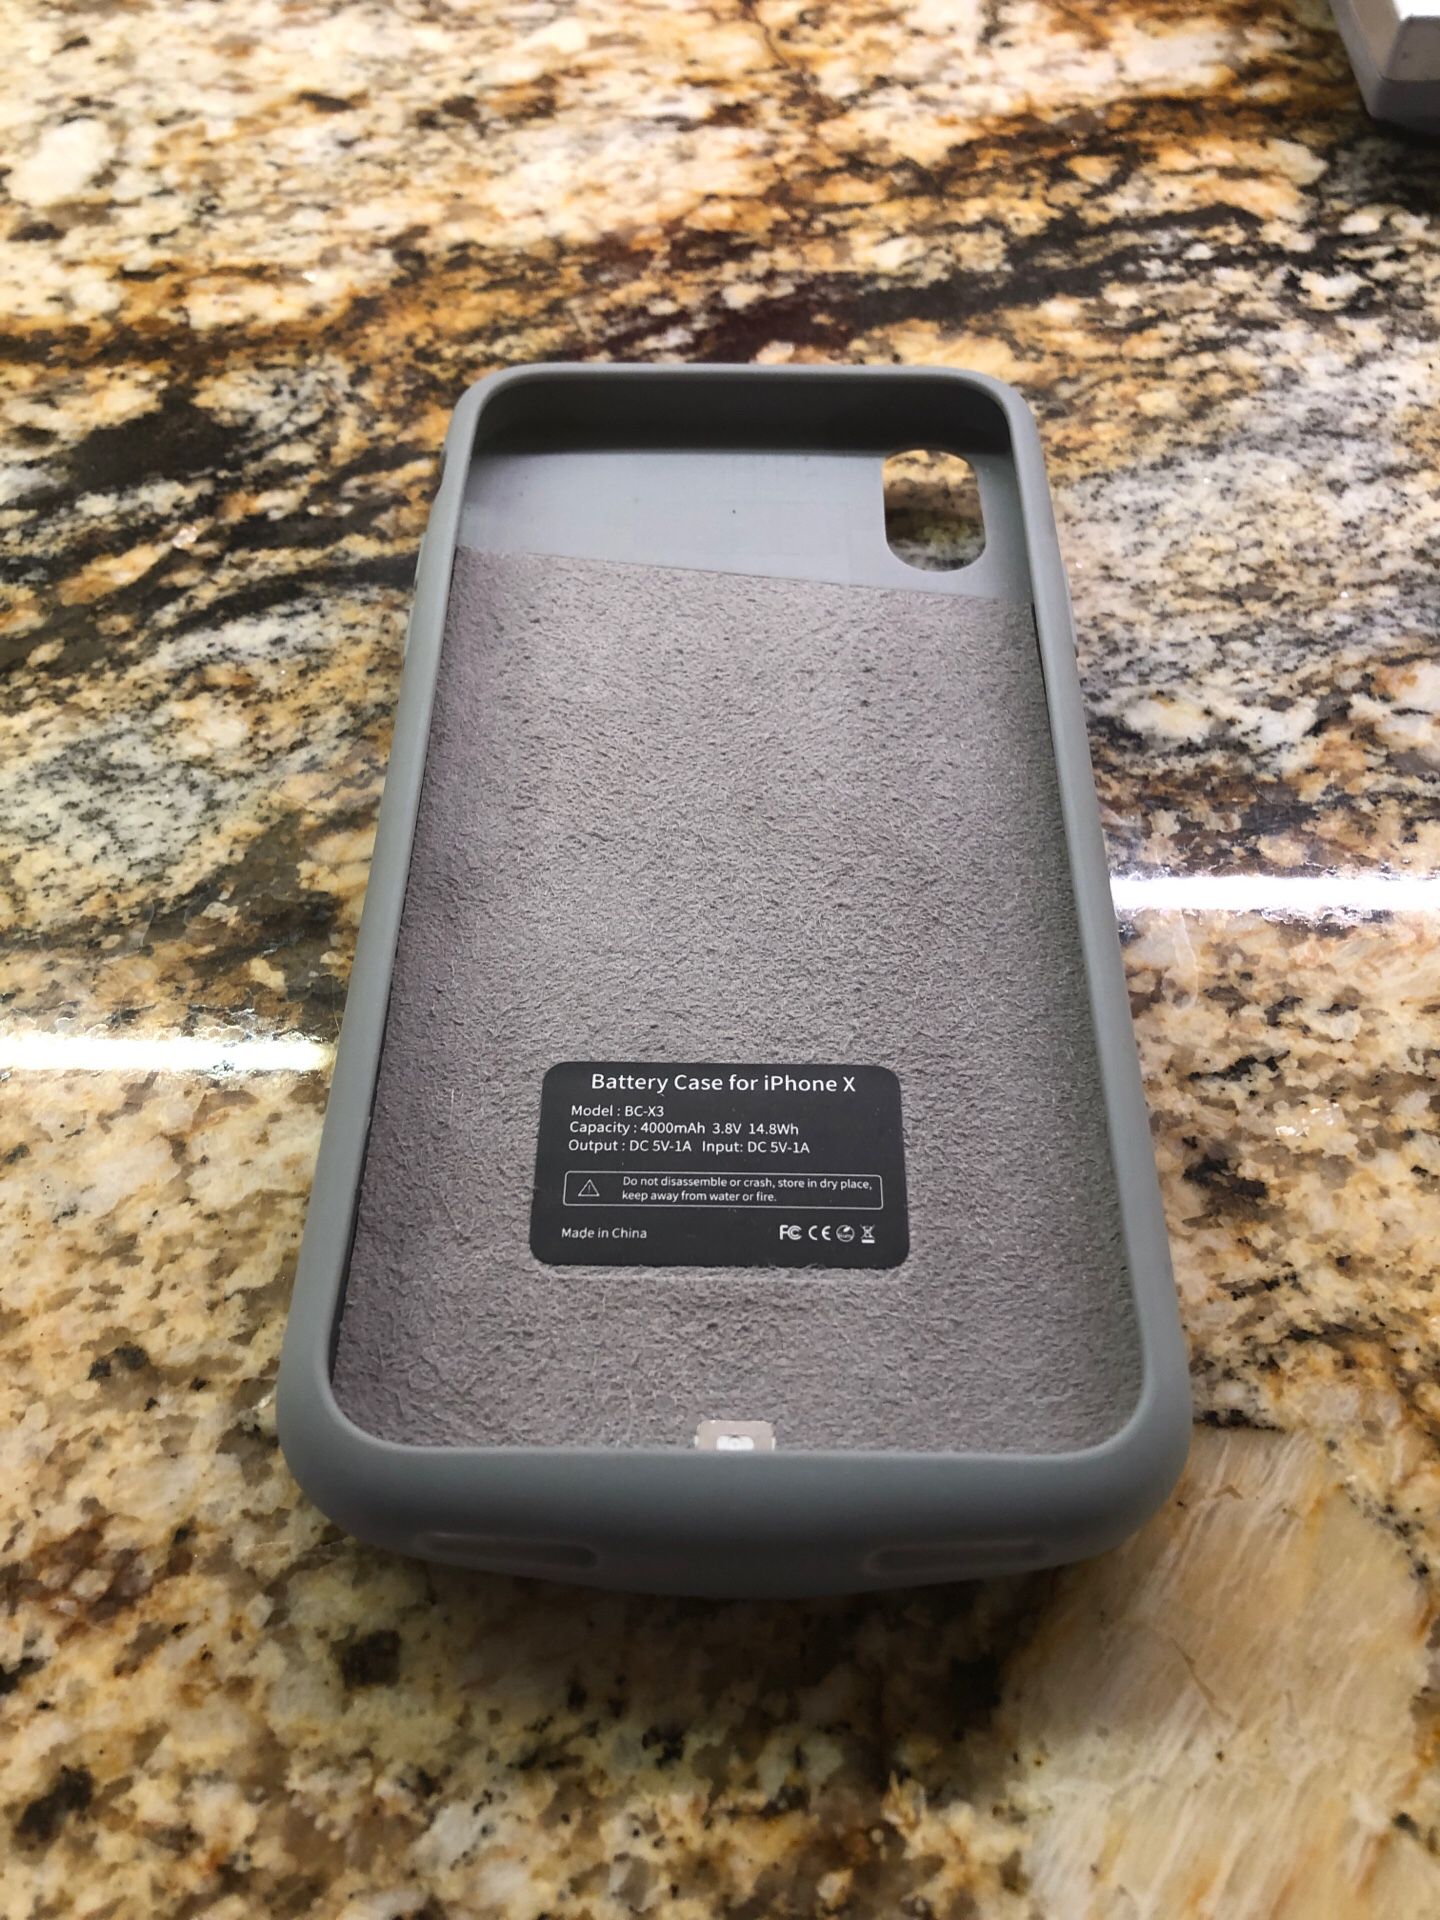 iPhone X charging case